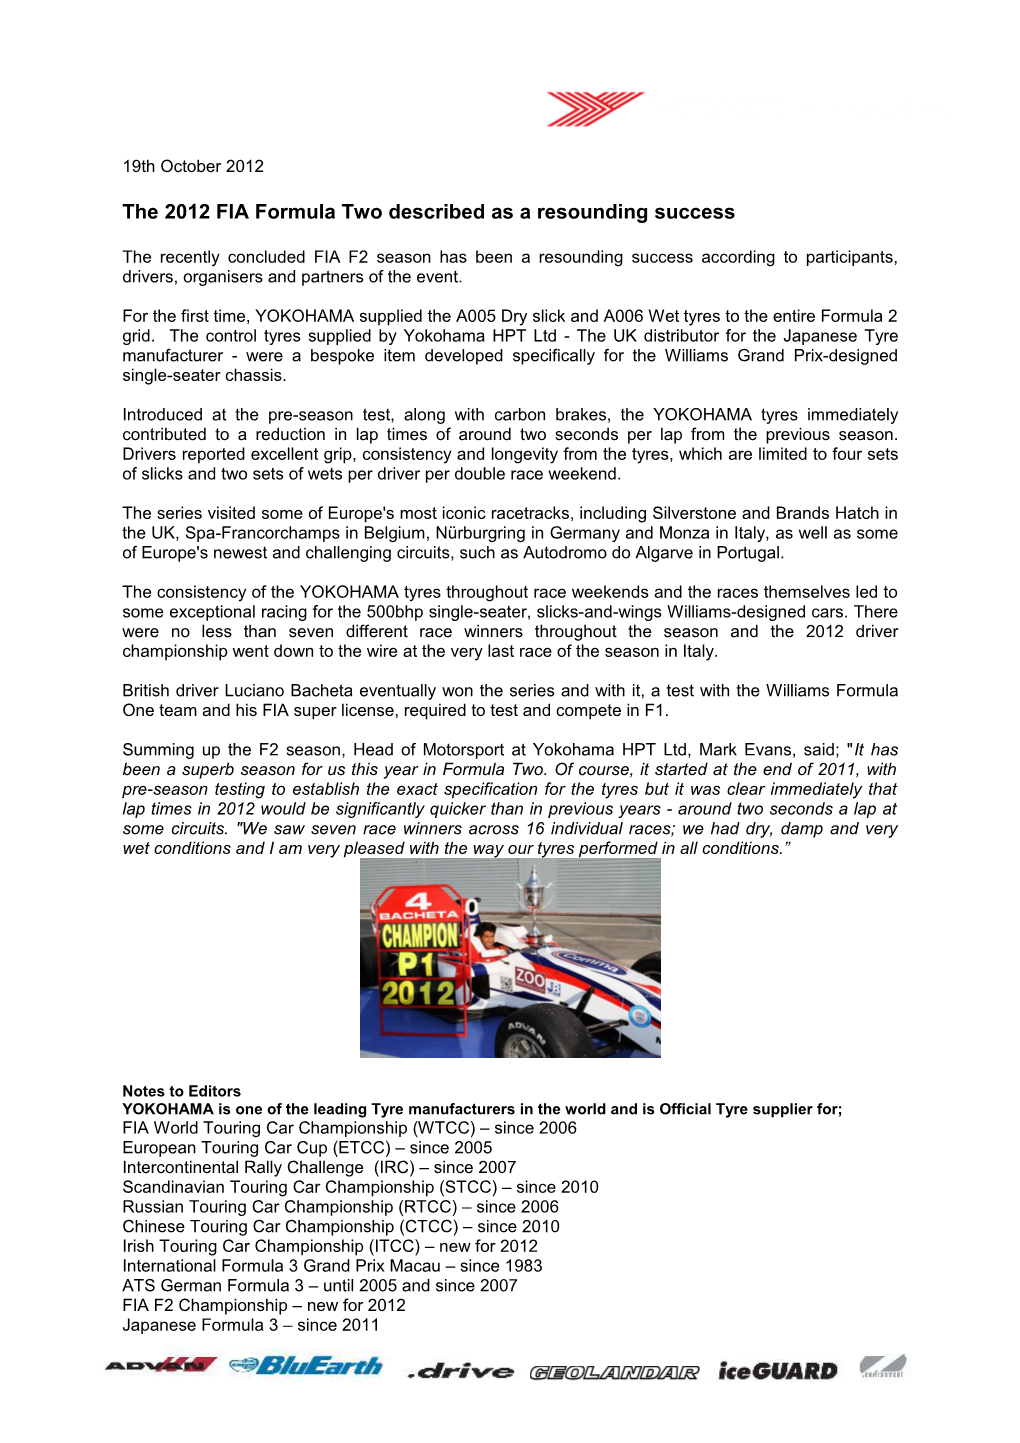 The 2012 FIA Formula Two Described As a Resounding Success